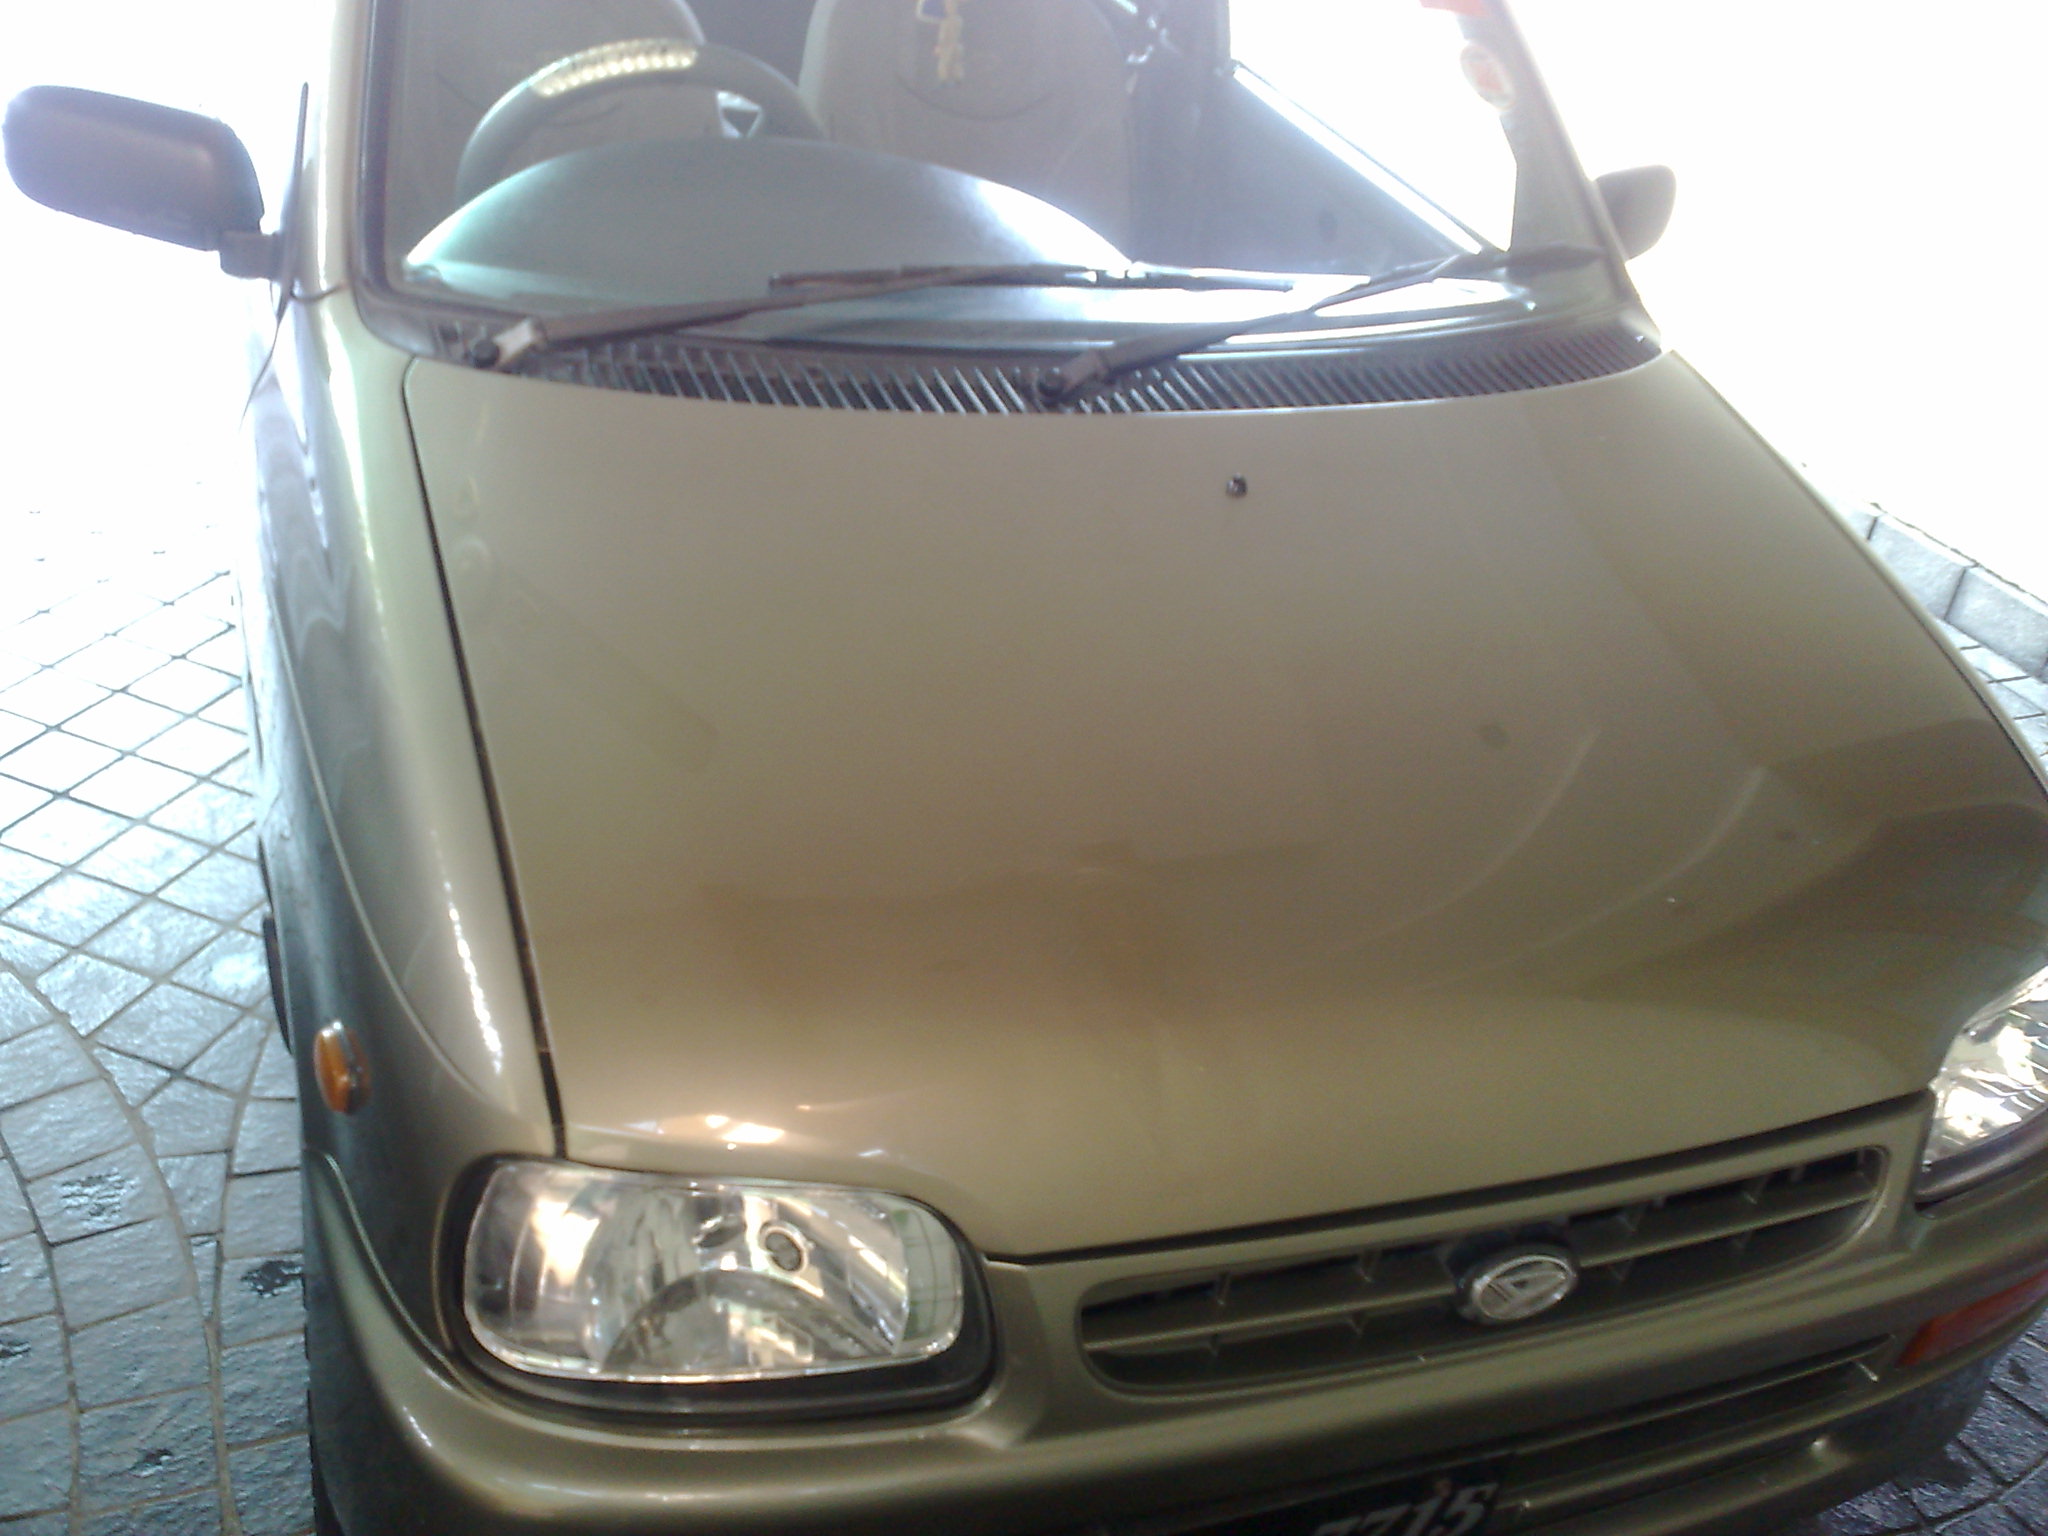 Daihatsu Cuore - 2005 iefrian07 Image-1